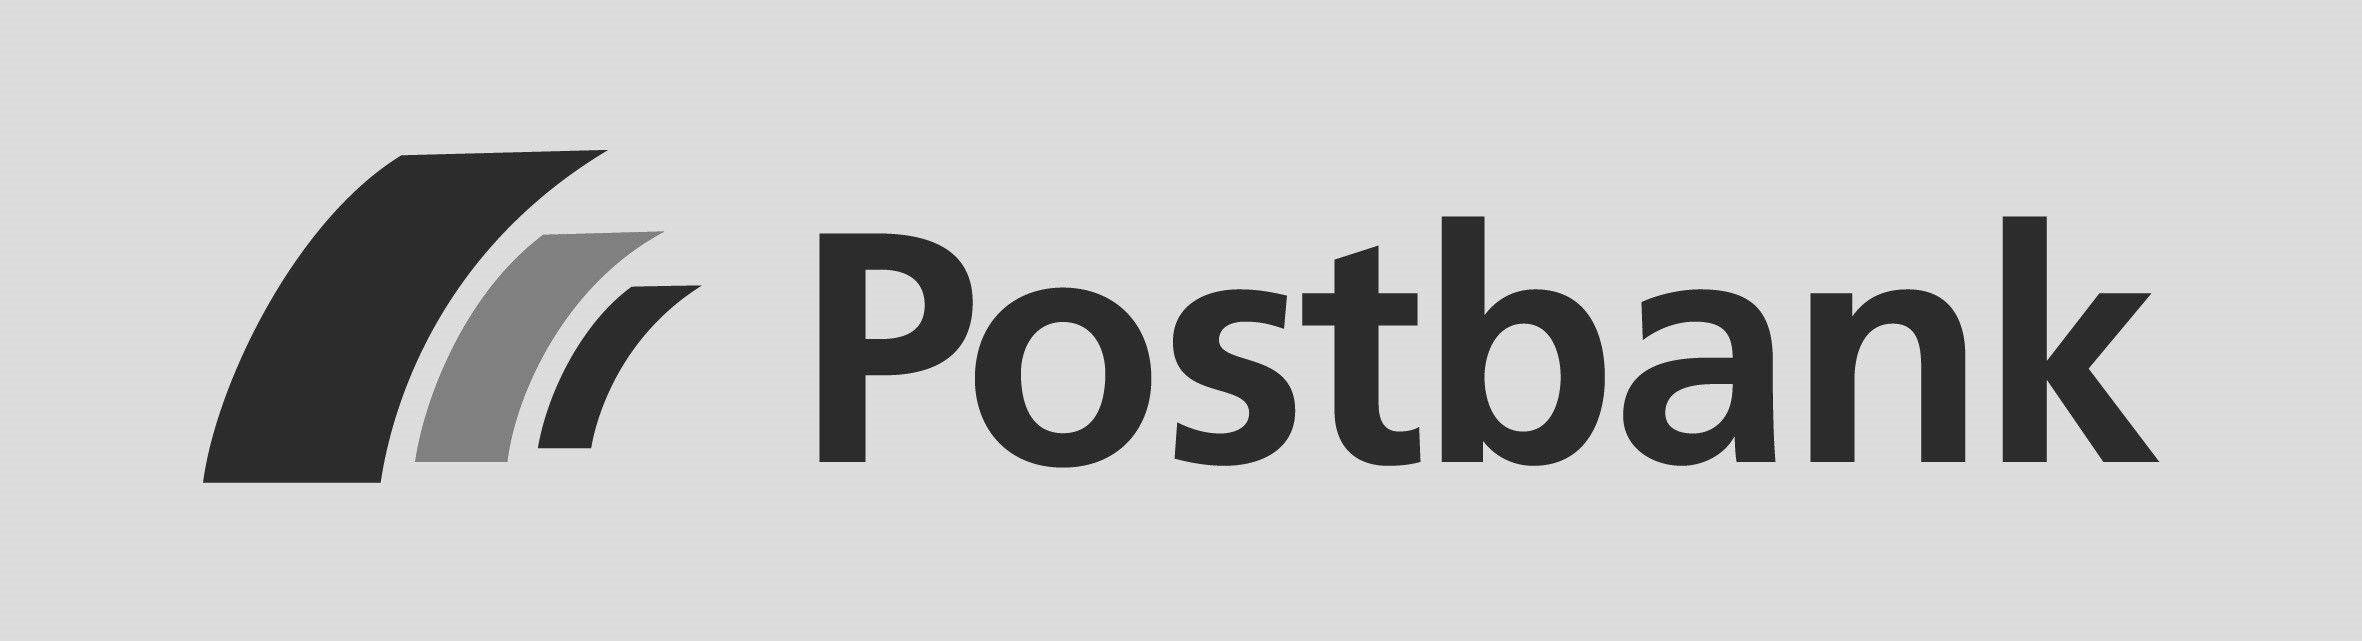 Postbank Logo - postbank logo sw